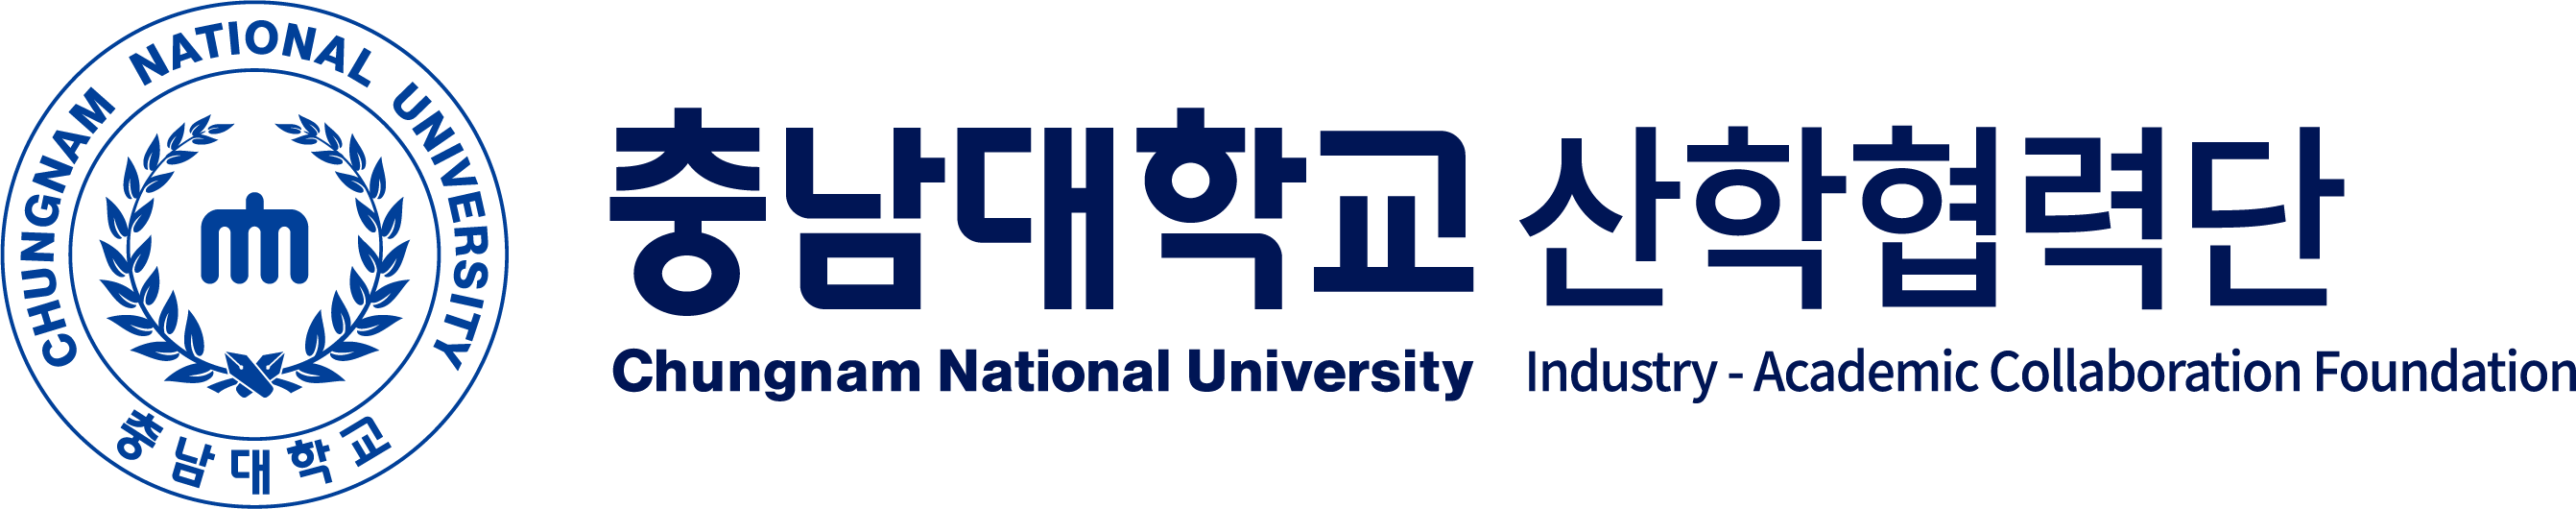 Chungnam National University LOGO